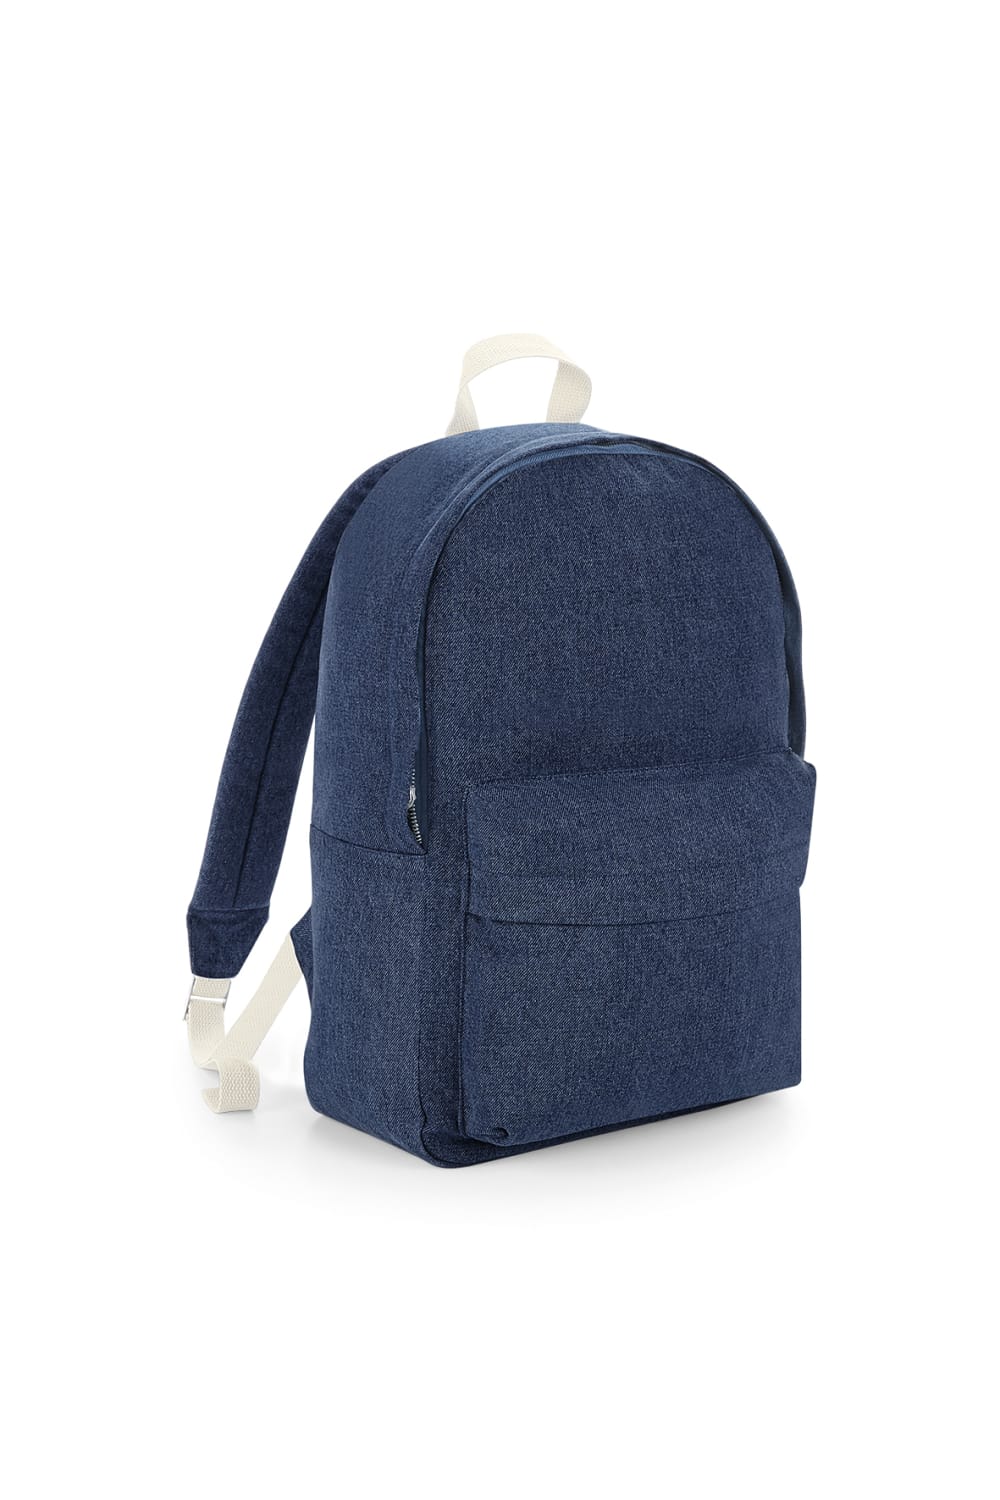 Denim Backpack (Denim Blue)